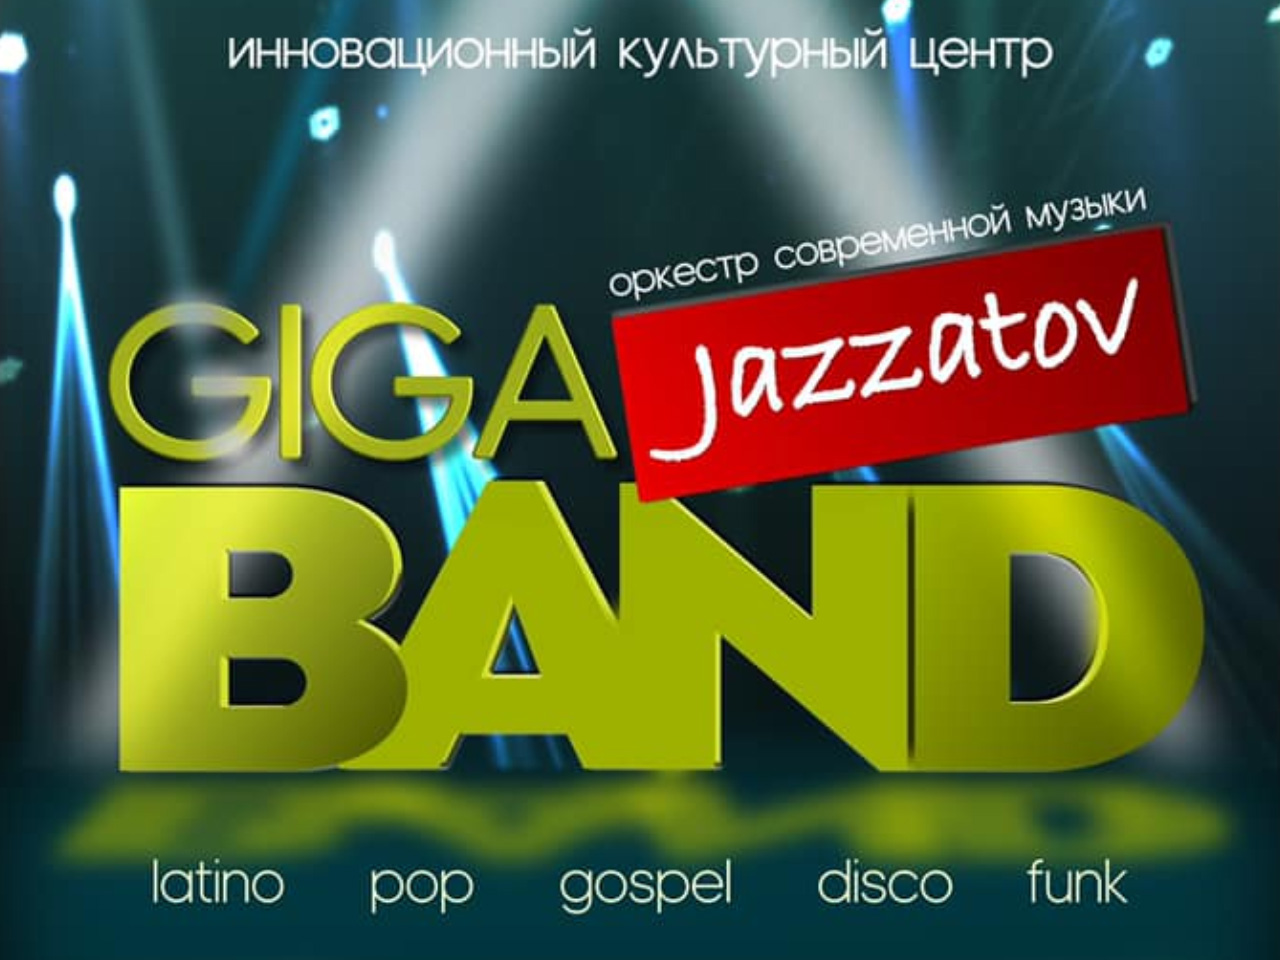  Jazzatov Giga Band  